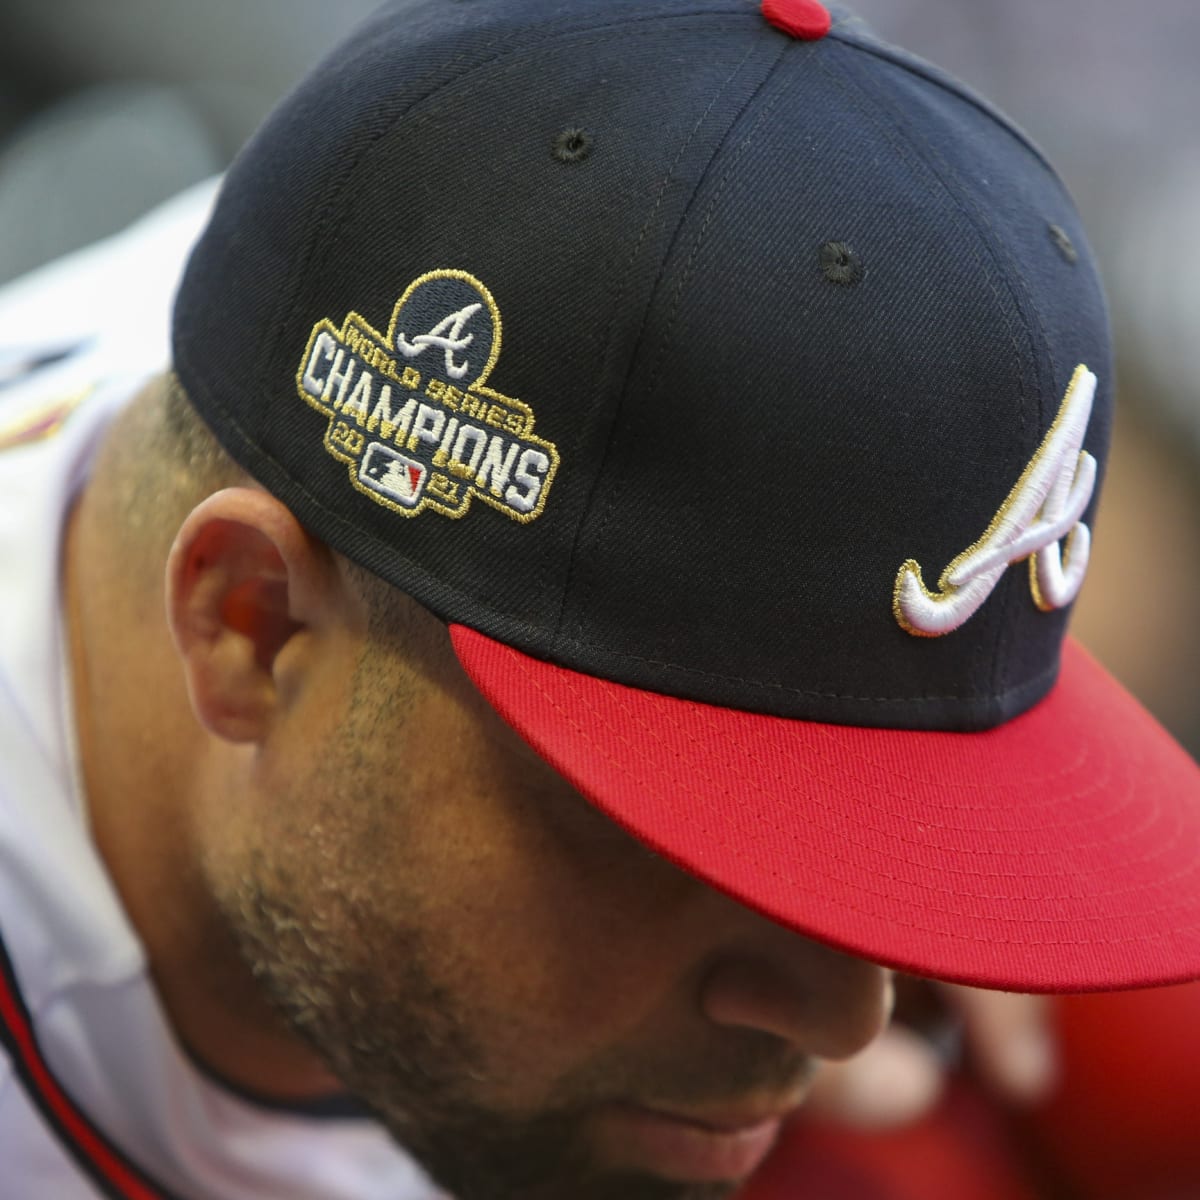 Atlanta Braves World Series hat what does it look like